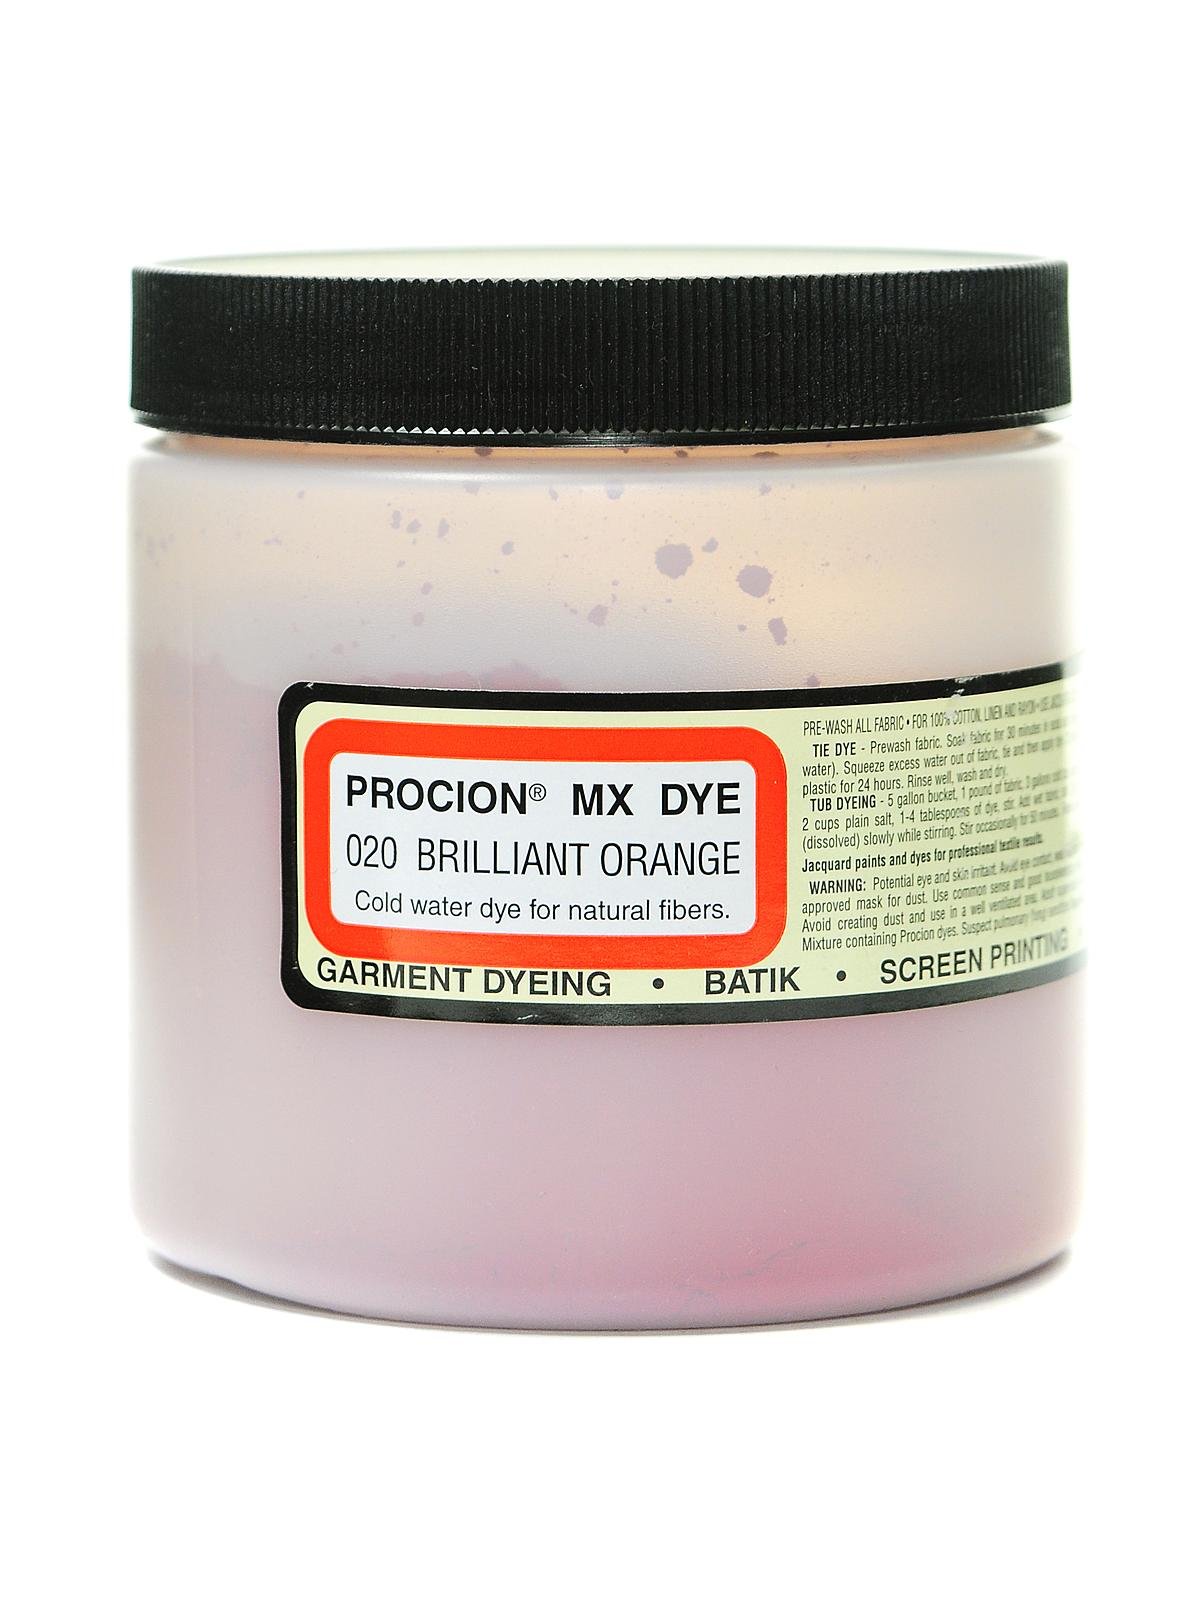 Jacquard Procion MX Dye - (016) Rust Orange